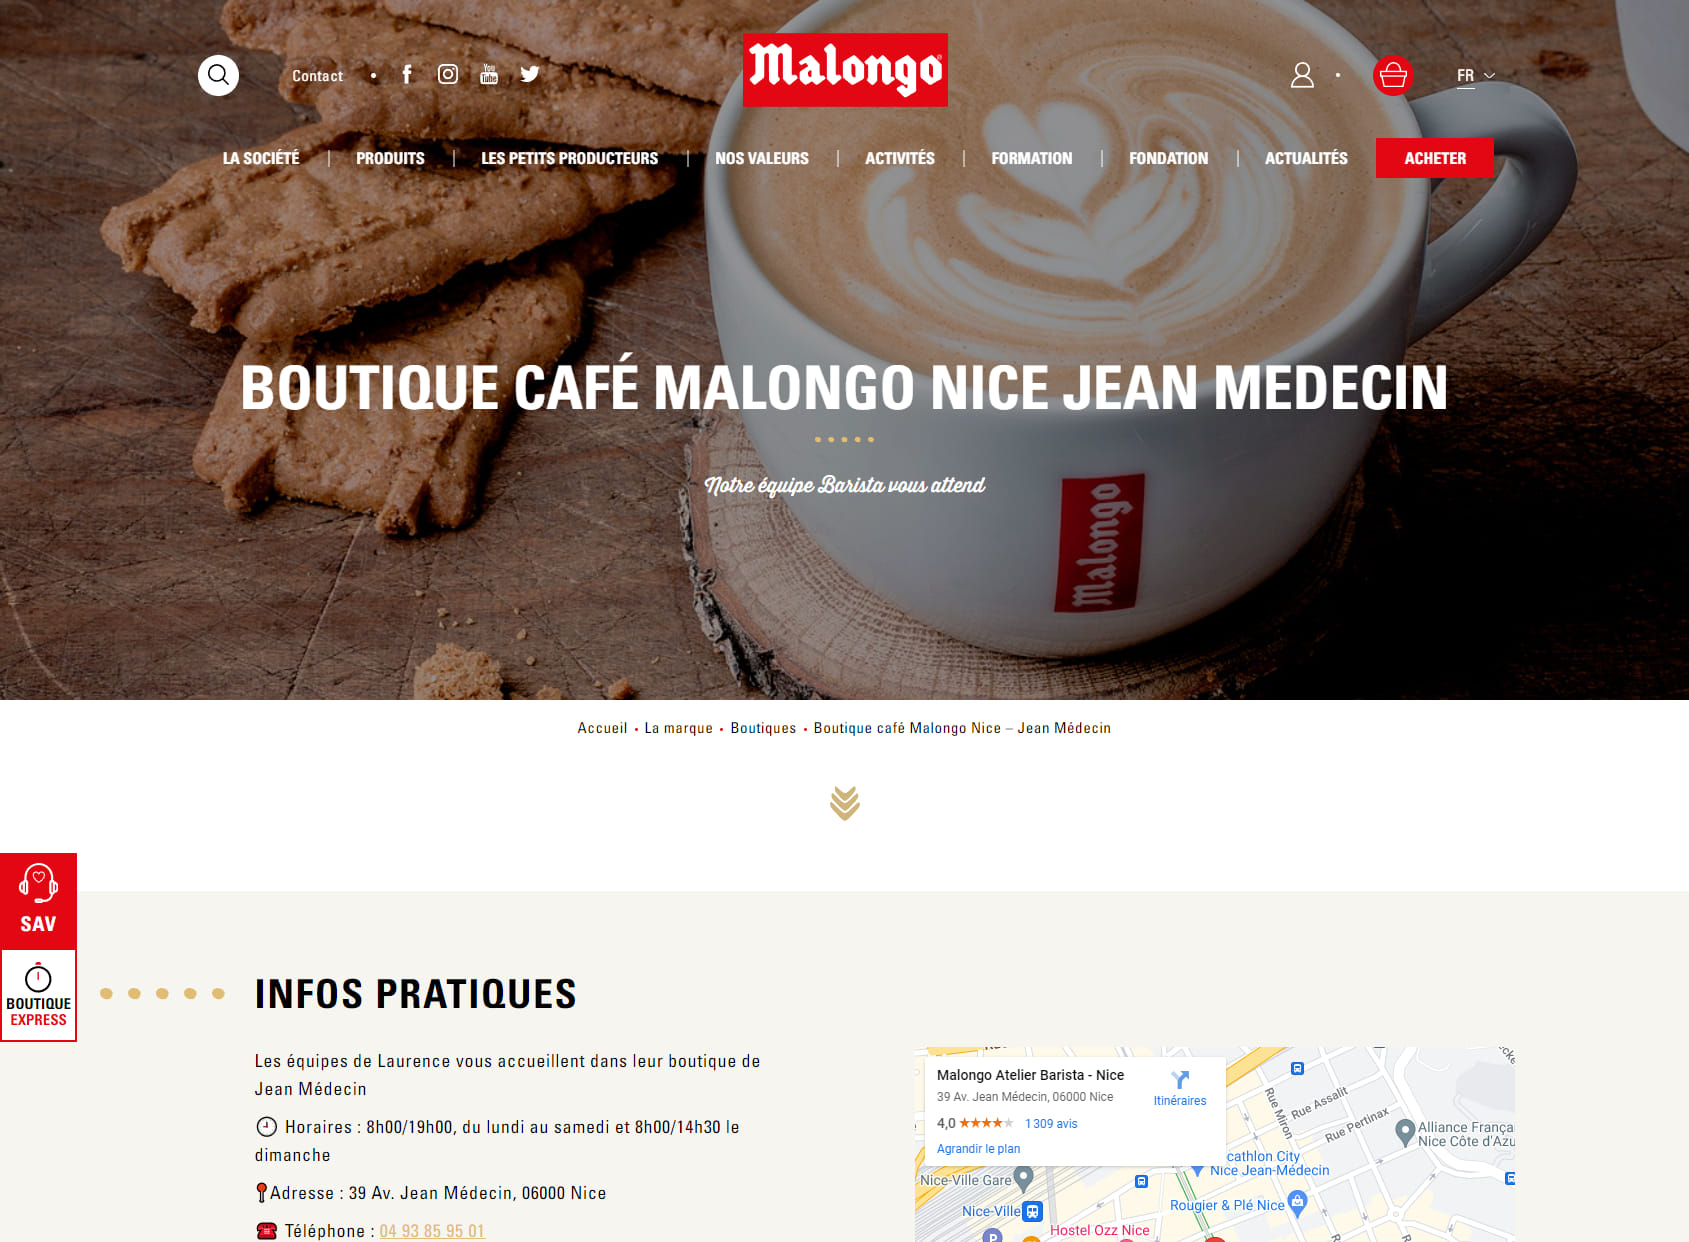 Malongo Atelier Barista - Nice